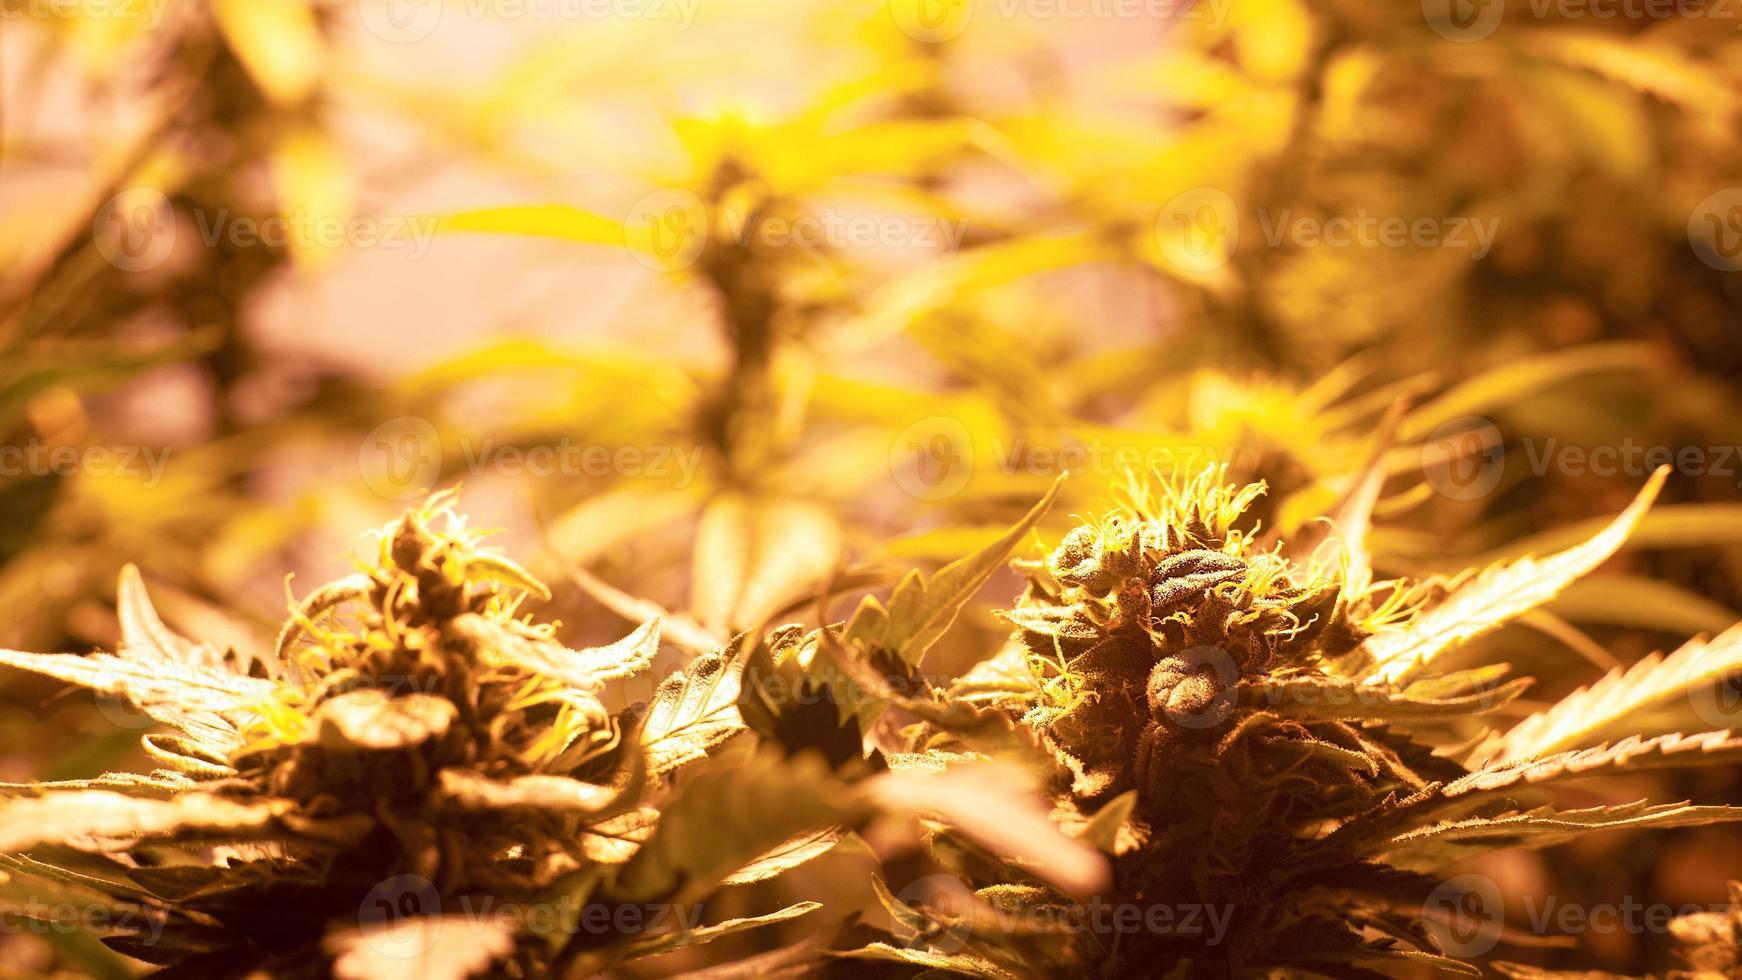 marihuana thuisplantage met bloeiende cannabisplanten onder kunstlicht binnenshuis foto